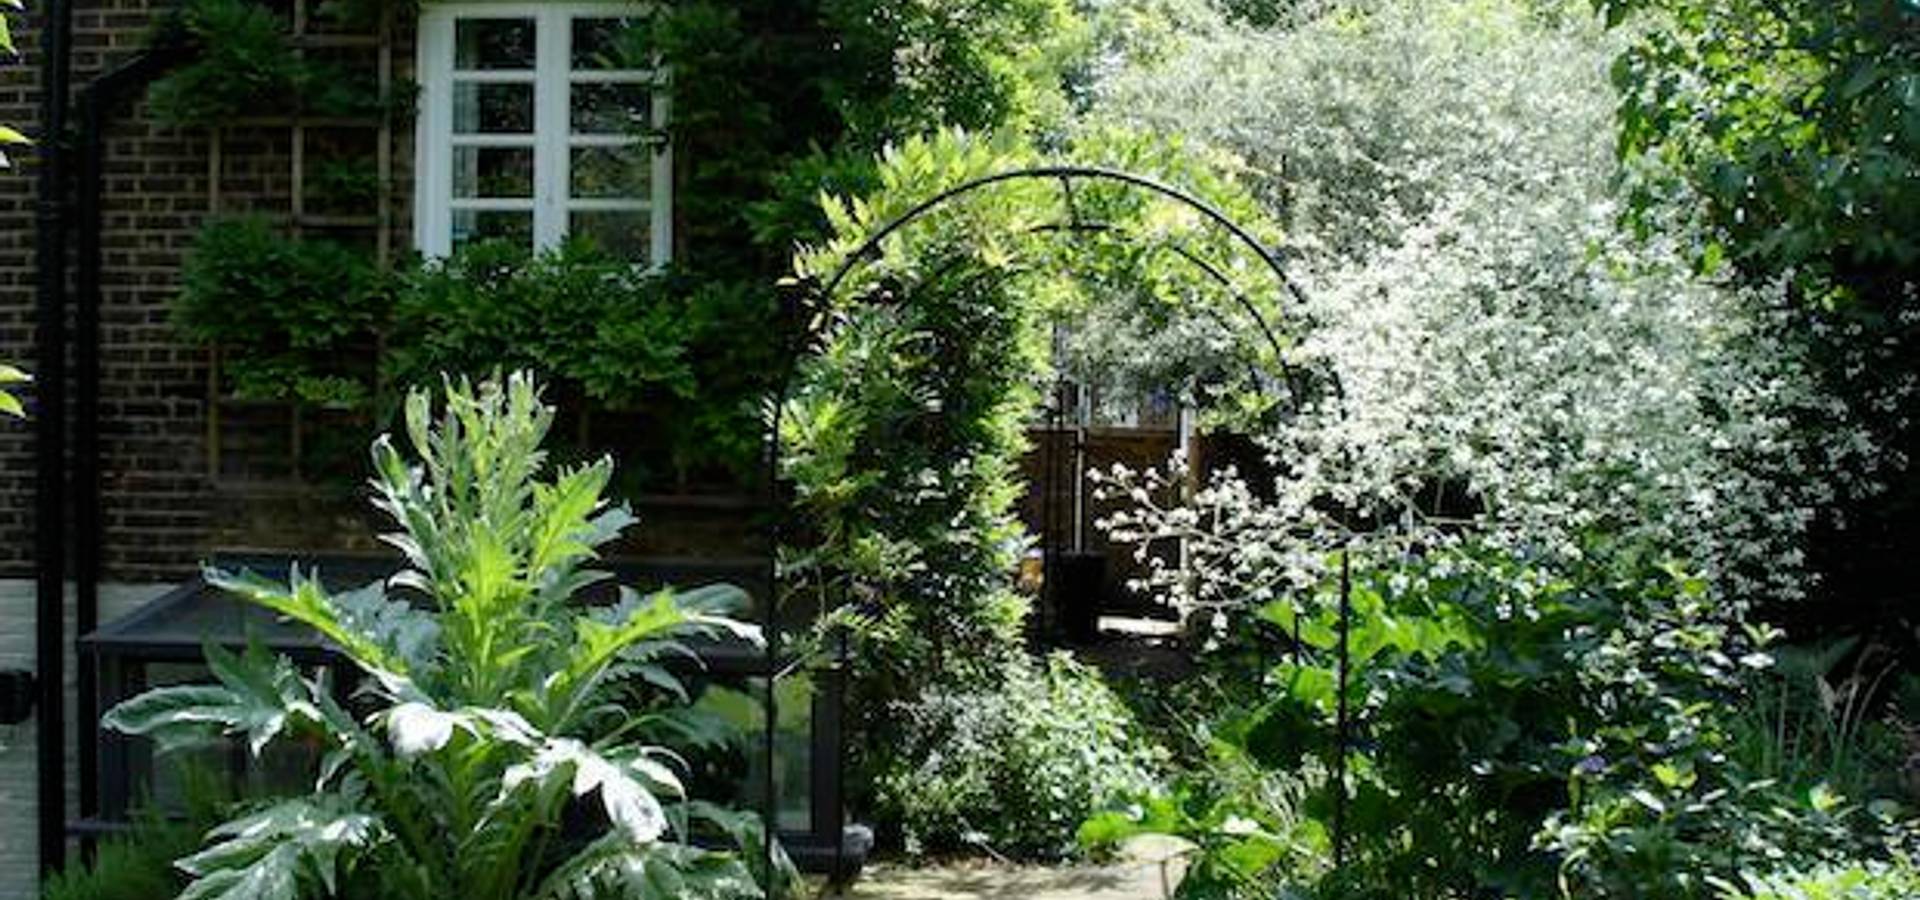 carol whitehead garden design